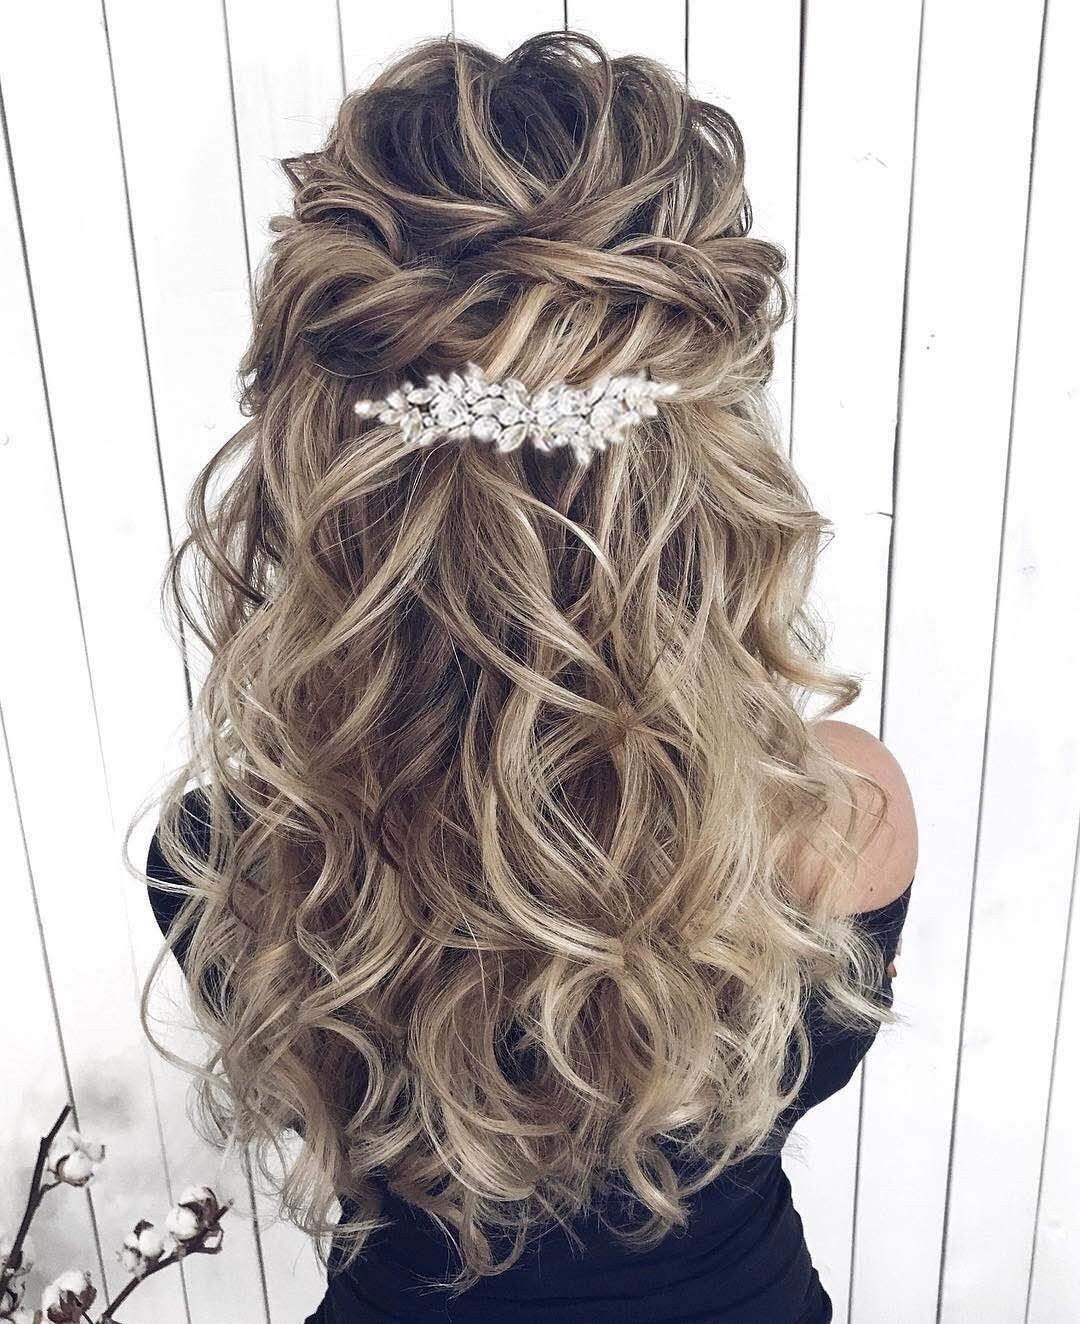 Bridal Hair Comb Crystal Headpiece Hair Clip Wedding Accessory 09953 Gold Flower 